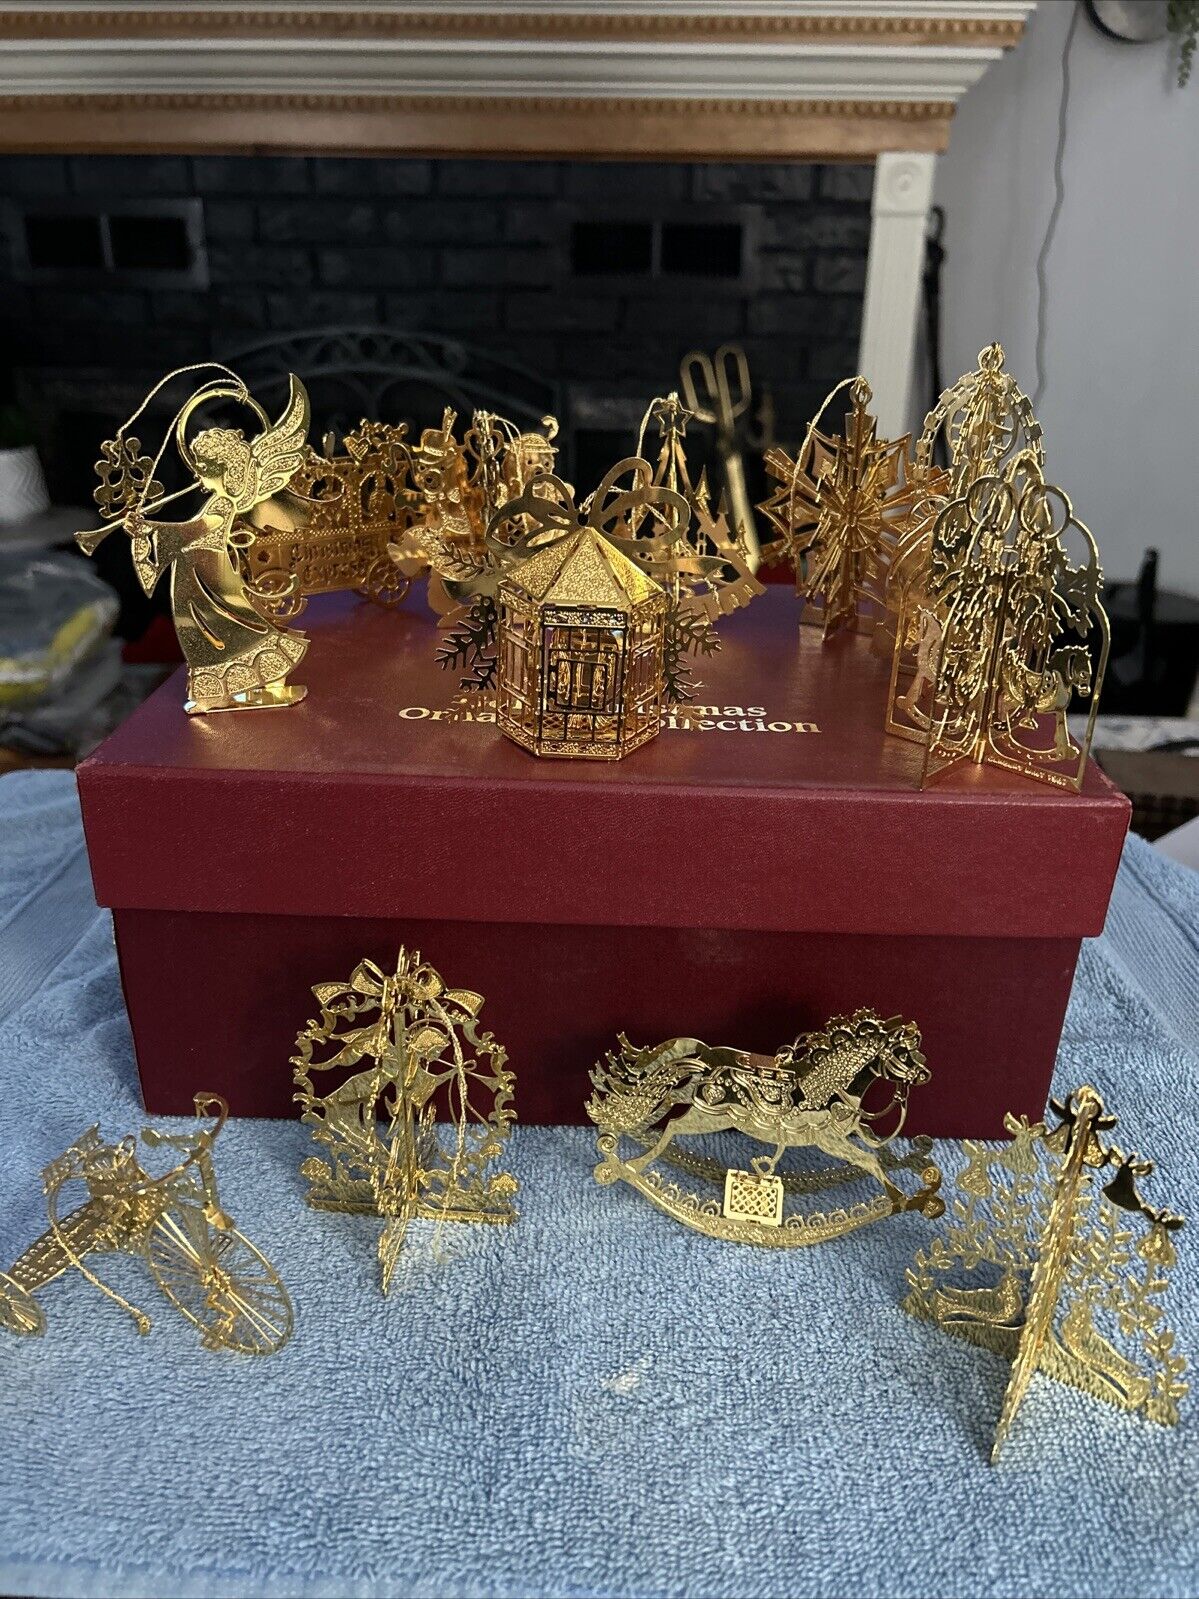 Vtg 1988 Danbury Mint Gold Christmas Ornament Collection Original Box Set of 12